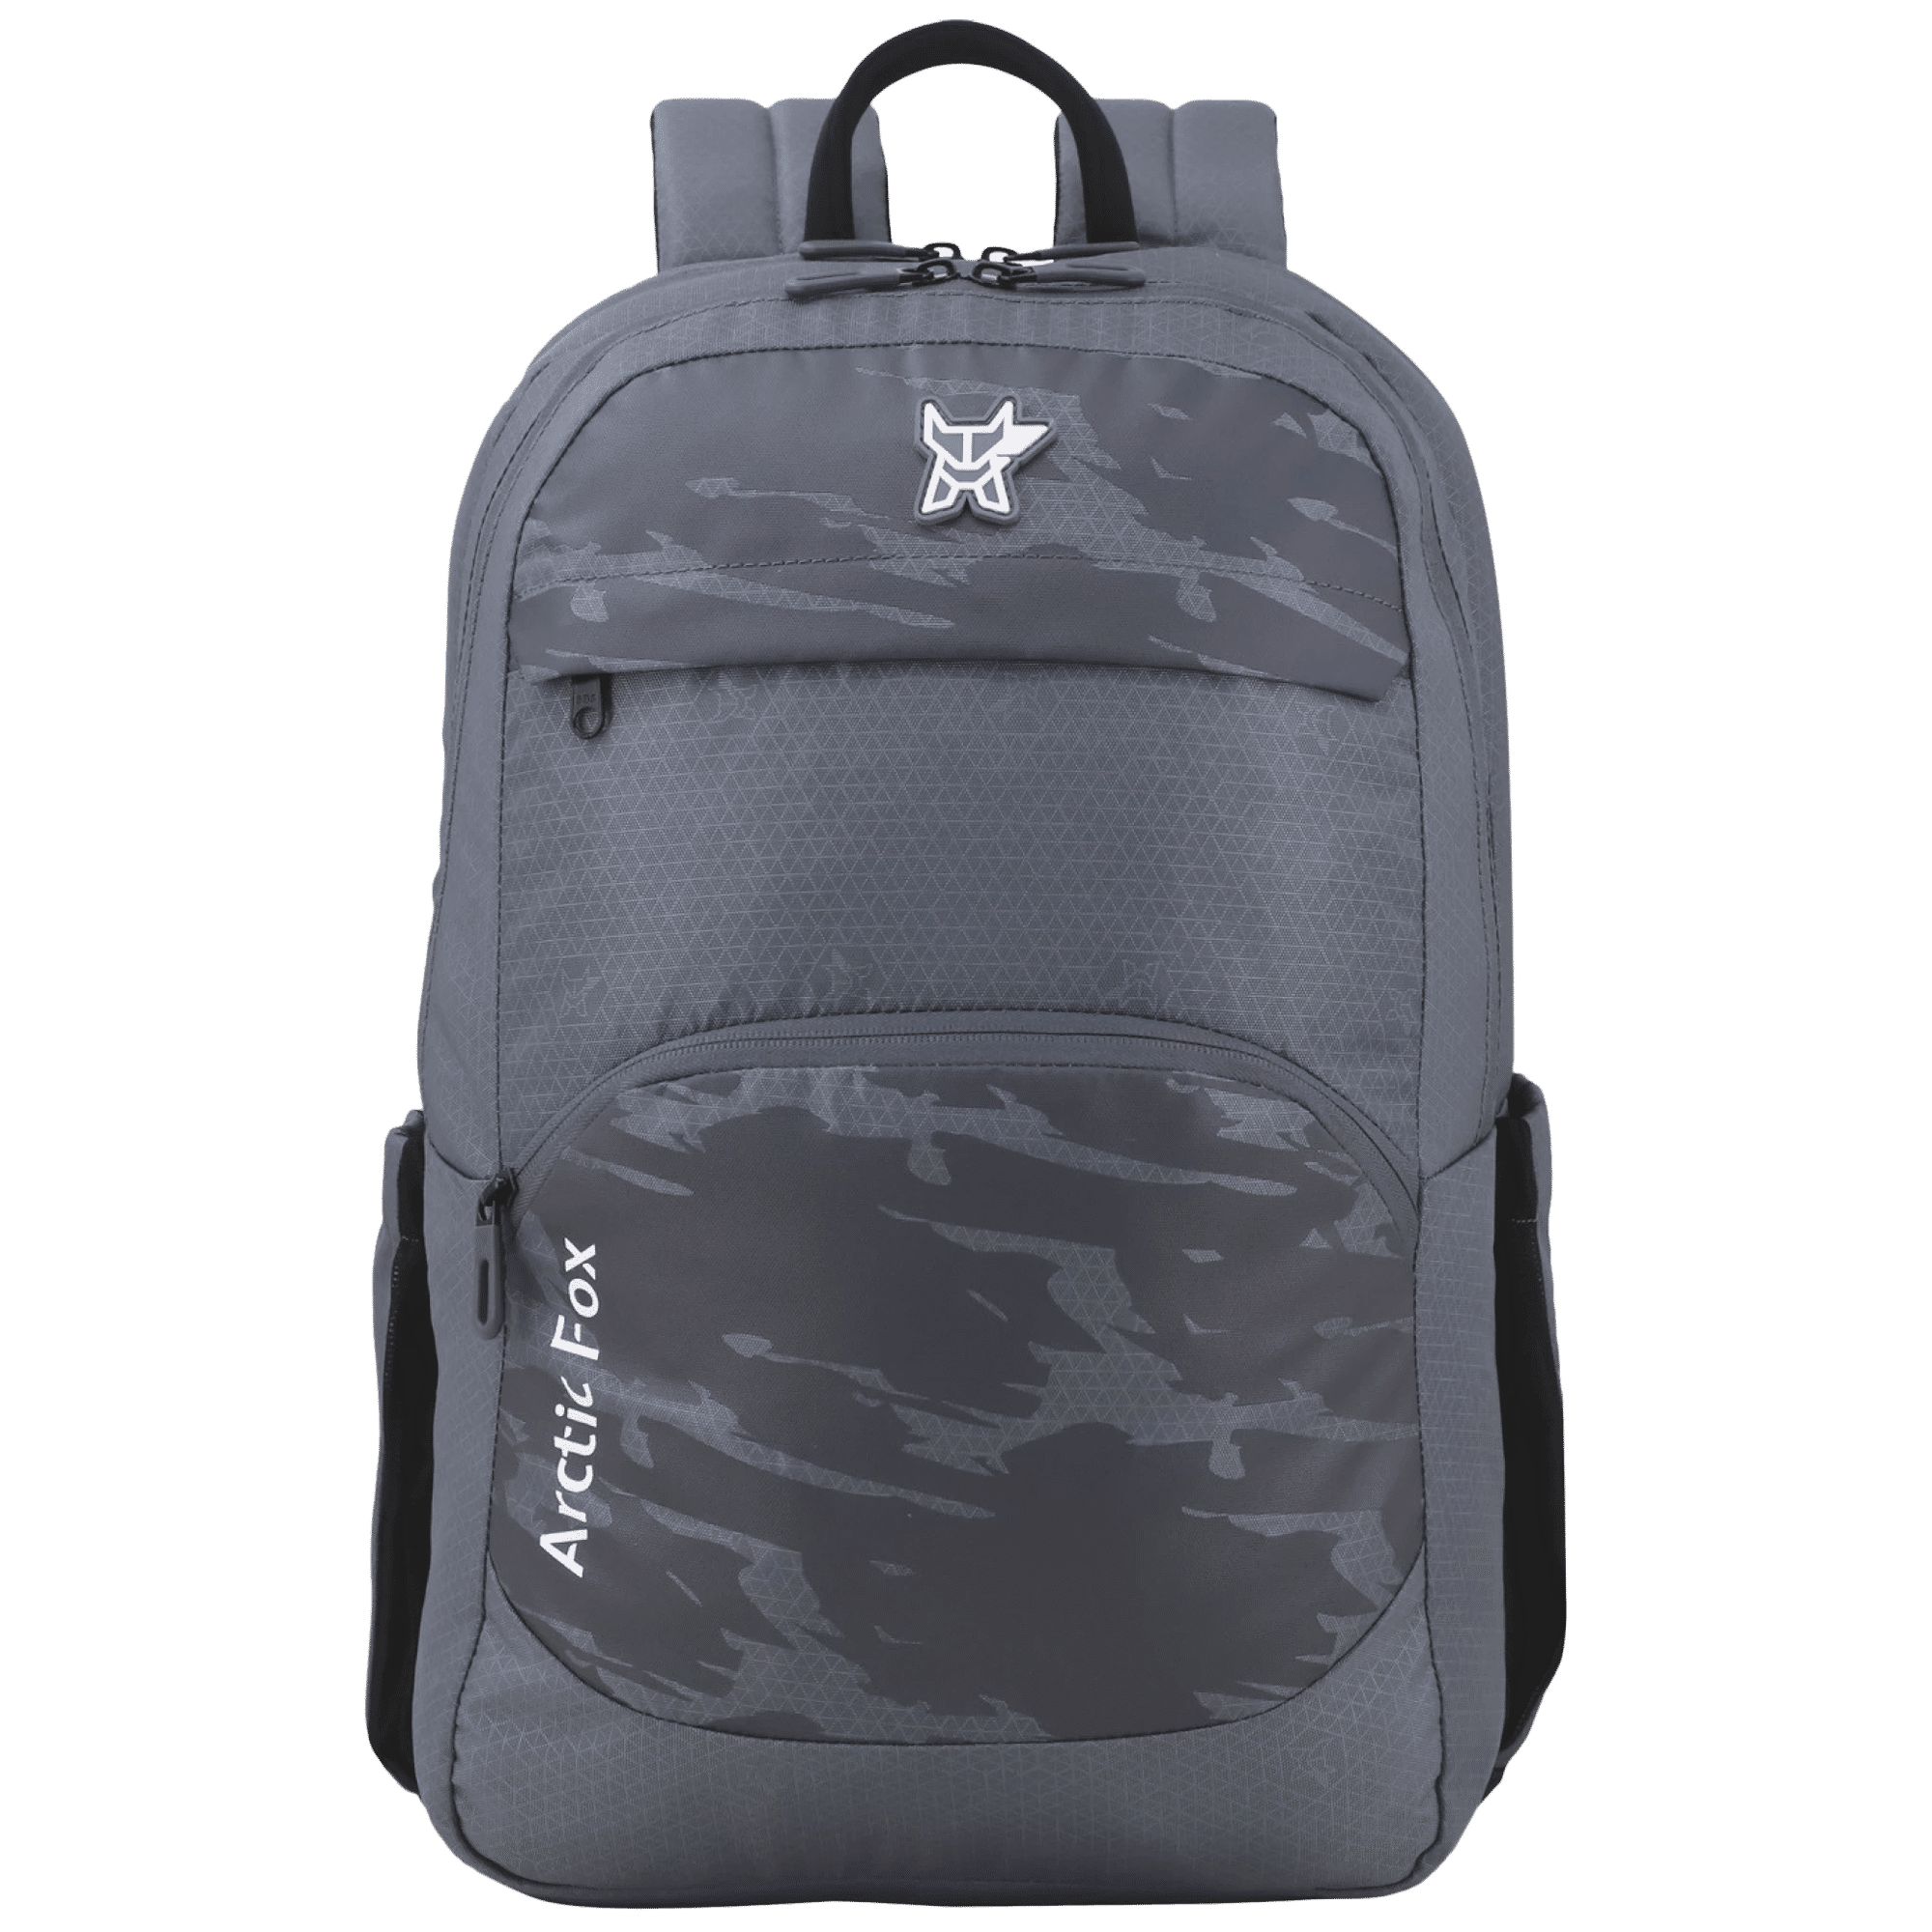 Buy Arctic Fox Backpacks Online in India | Myntra